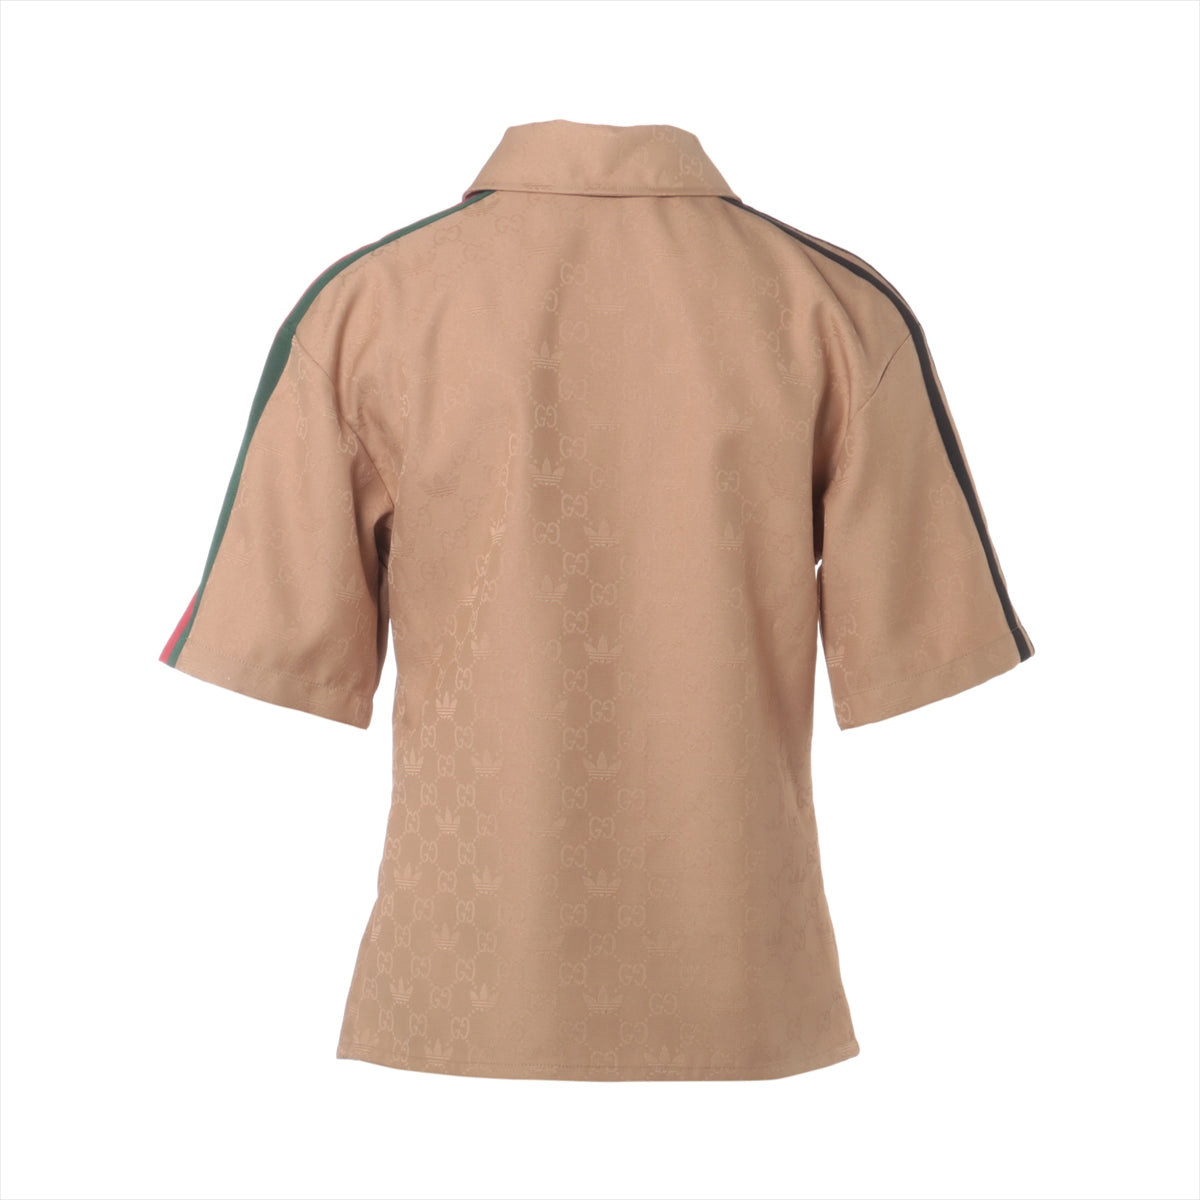 Gucci x adidas GG jacquard Polyester Shirt 36 Ladies' Beige  703004 Trefoil